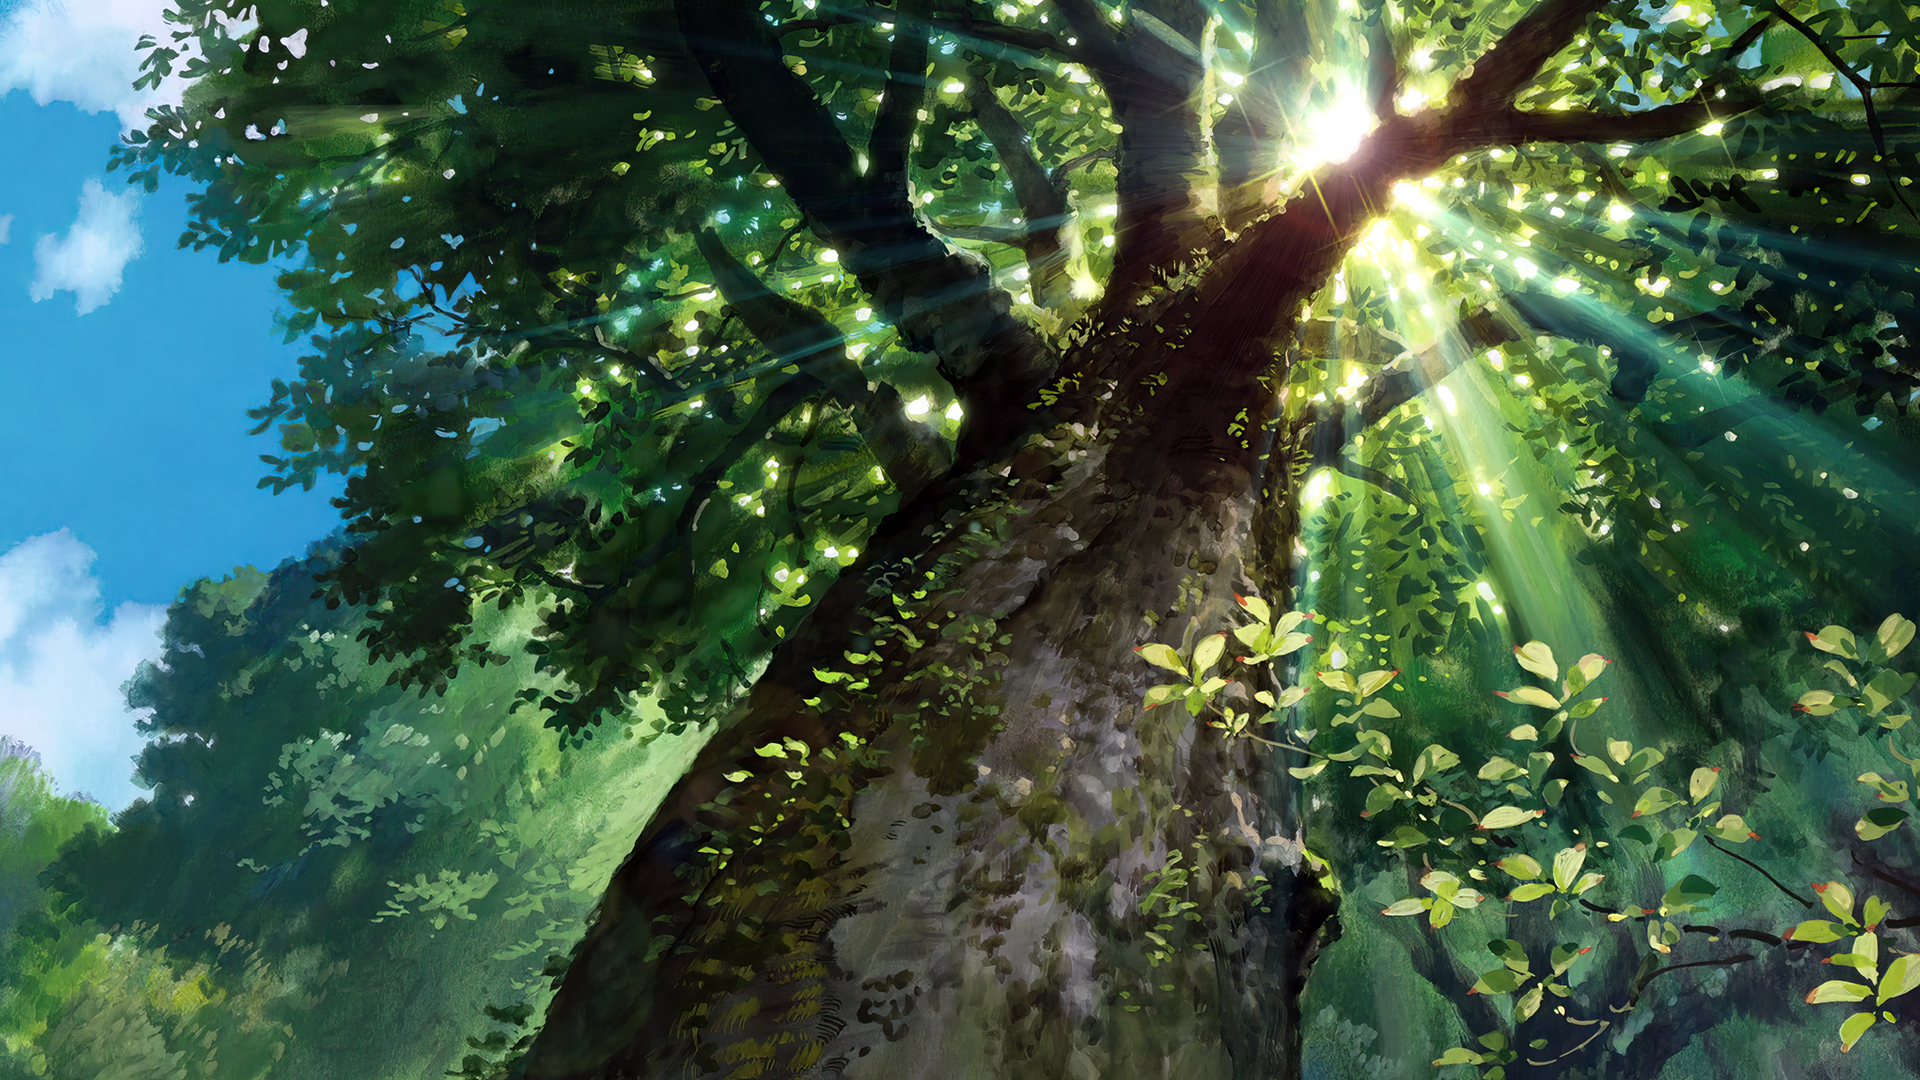 Anime 1920x1080 Kari-gurashi no Arietti animated movies anime animation film stills Studio Ghibli trees leaves sky forest sunlight summer low-angle foliage